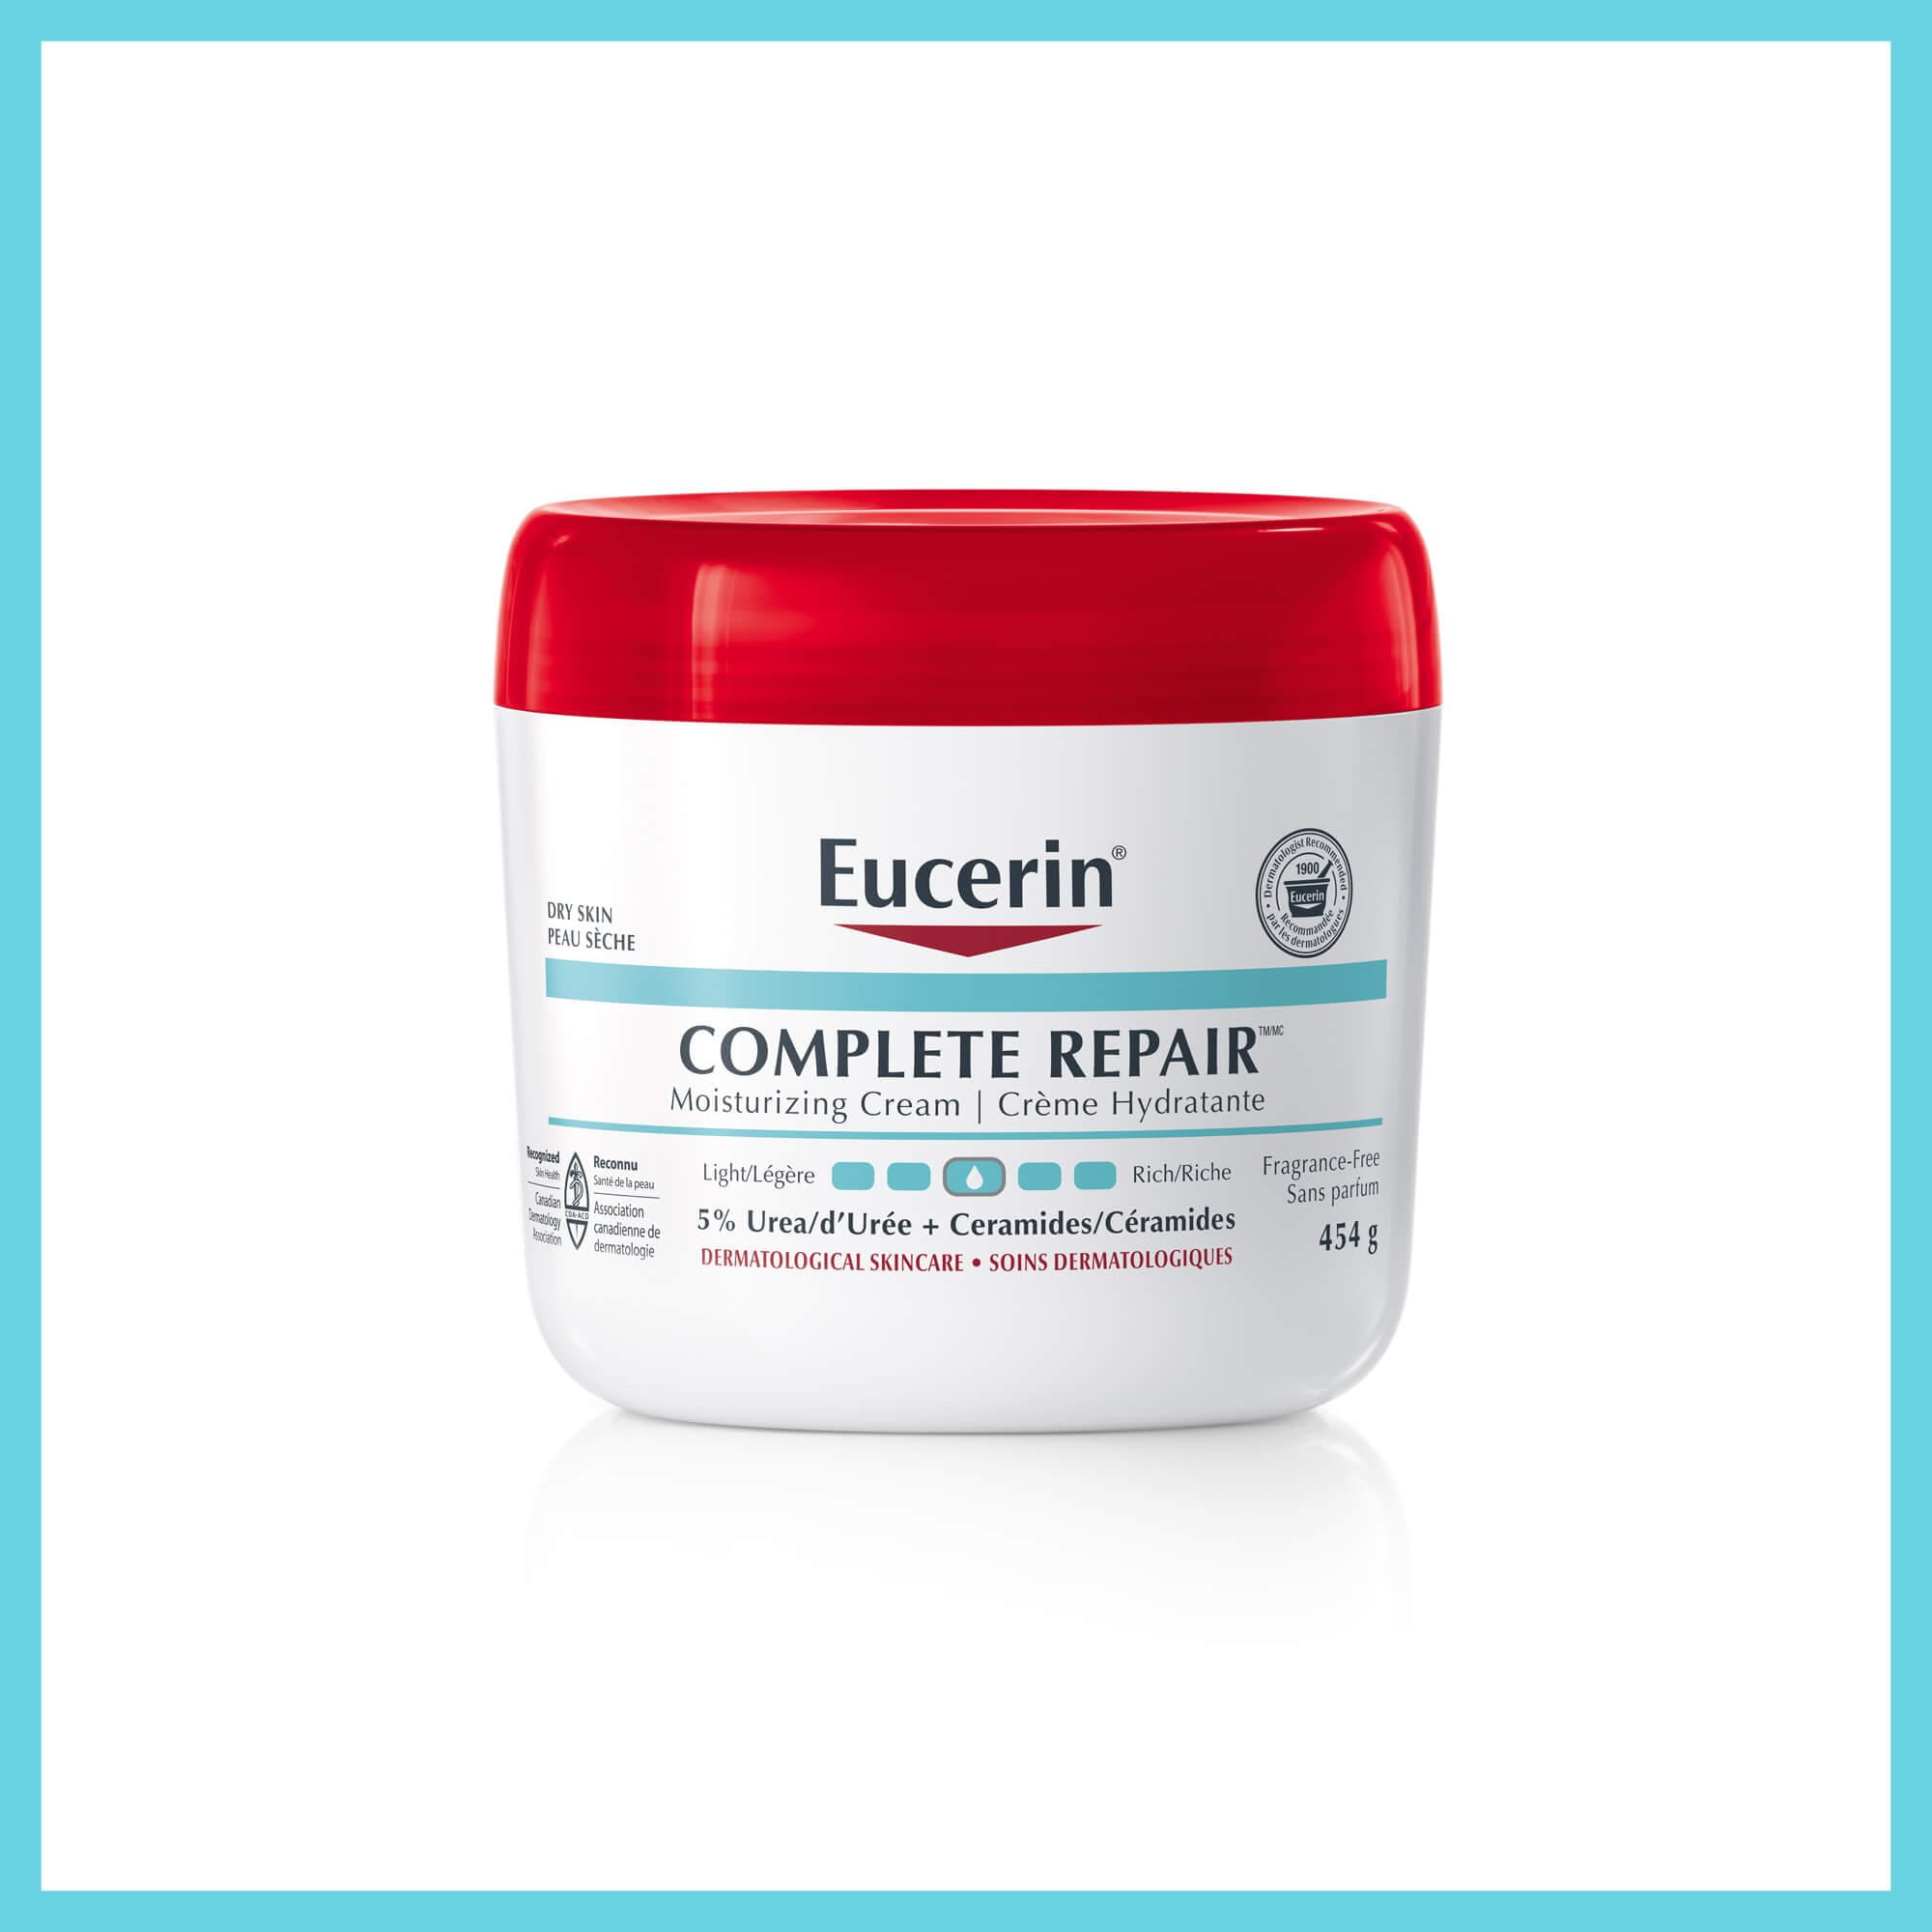 Eucerin: Dry | Complete Repair Moisturizing Cream | 5% Urea